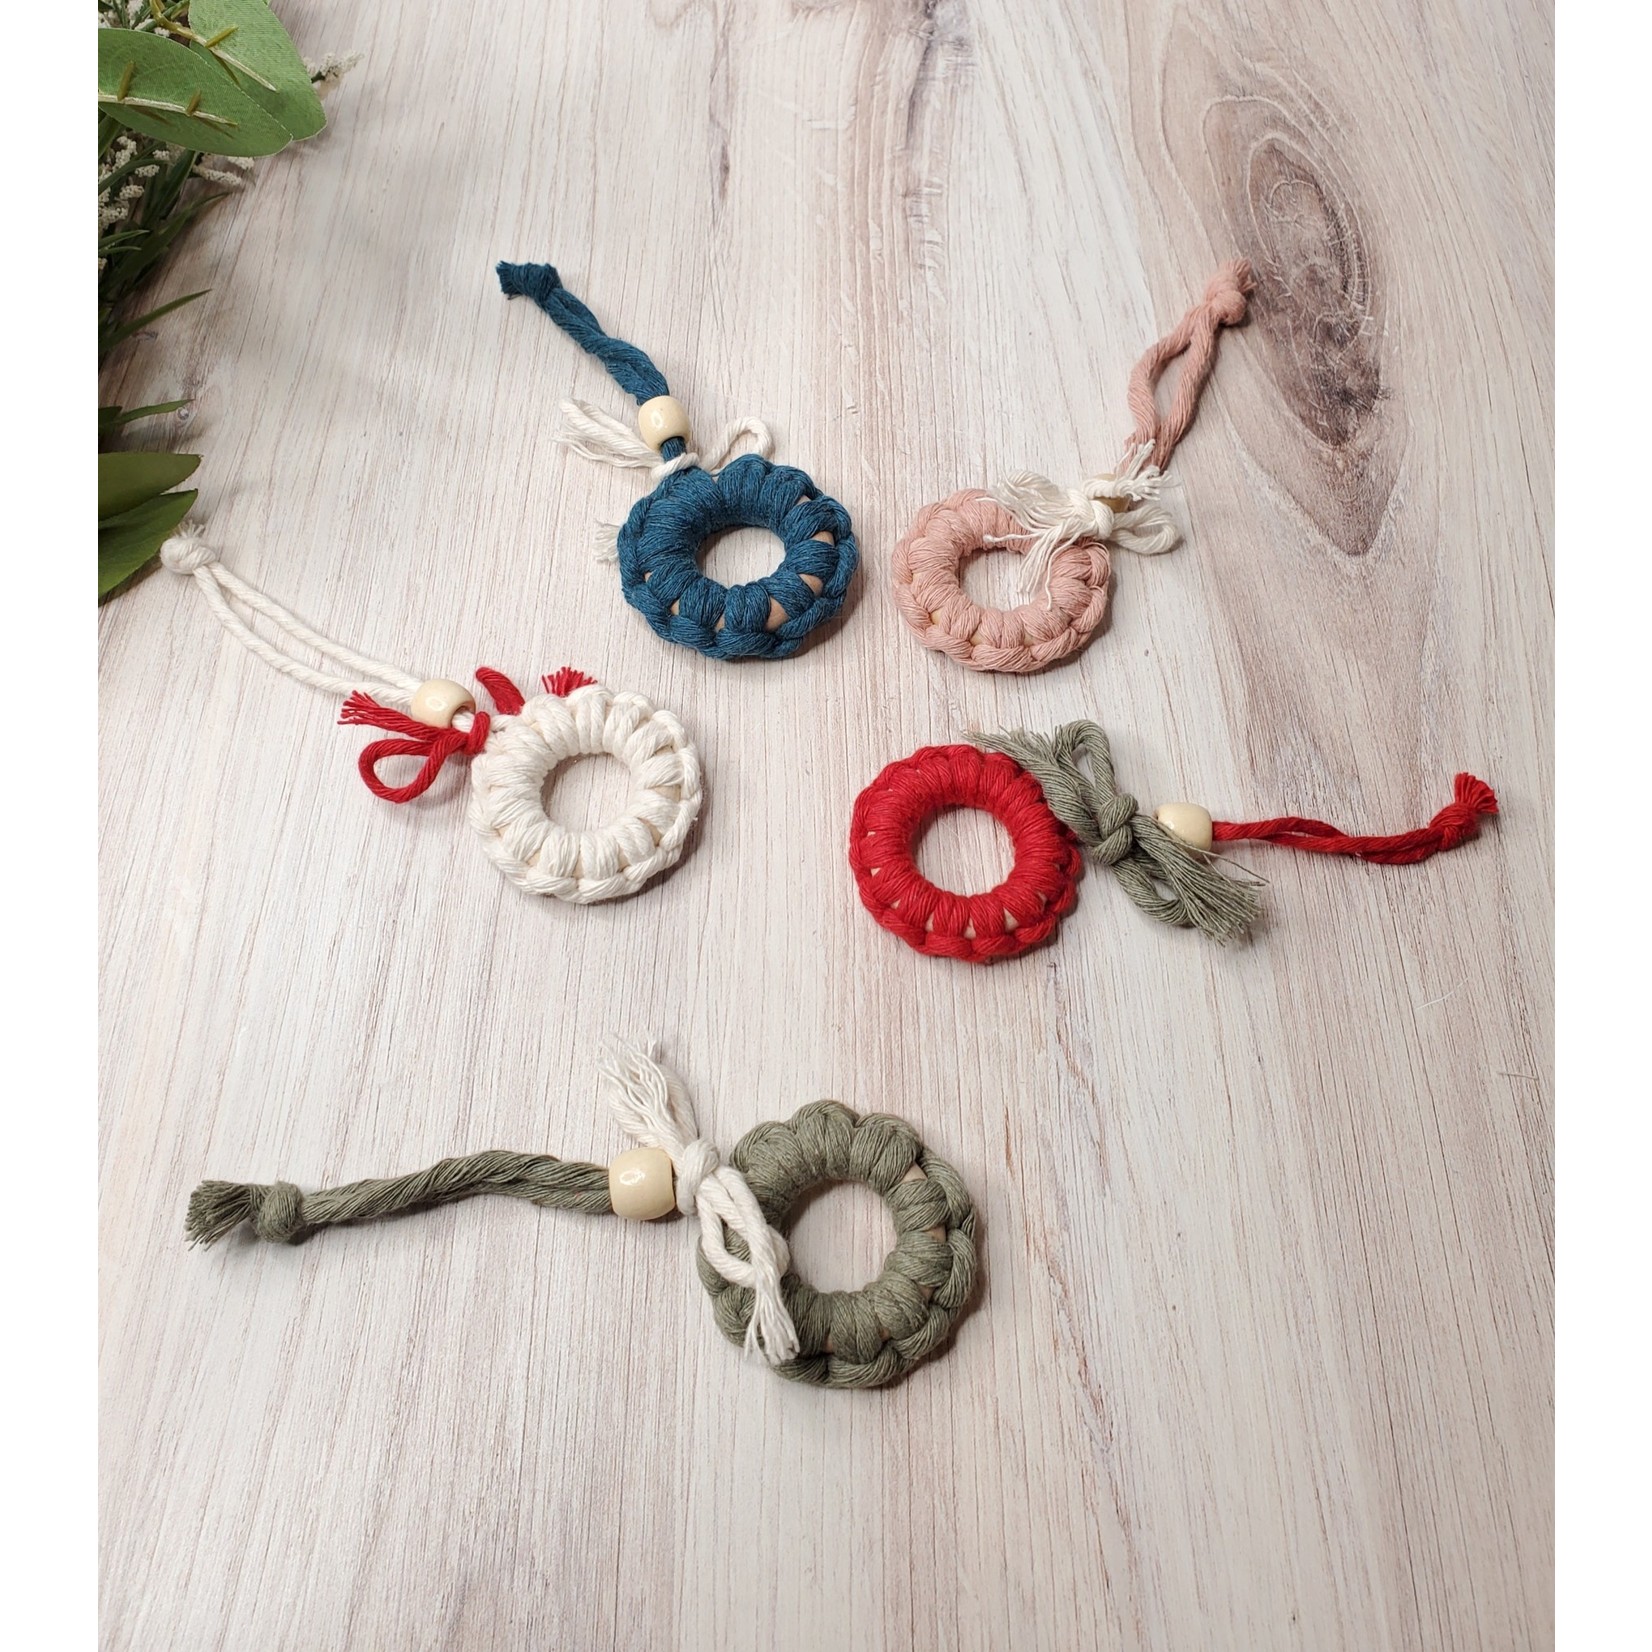 Tian Design & Handcraft Macrame Ornaments - Wreath -